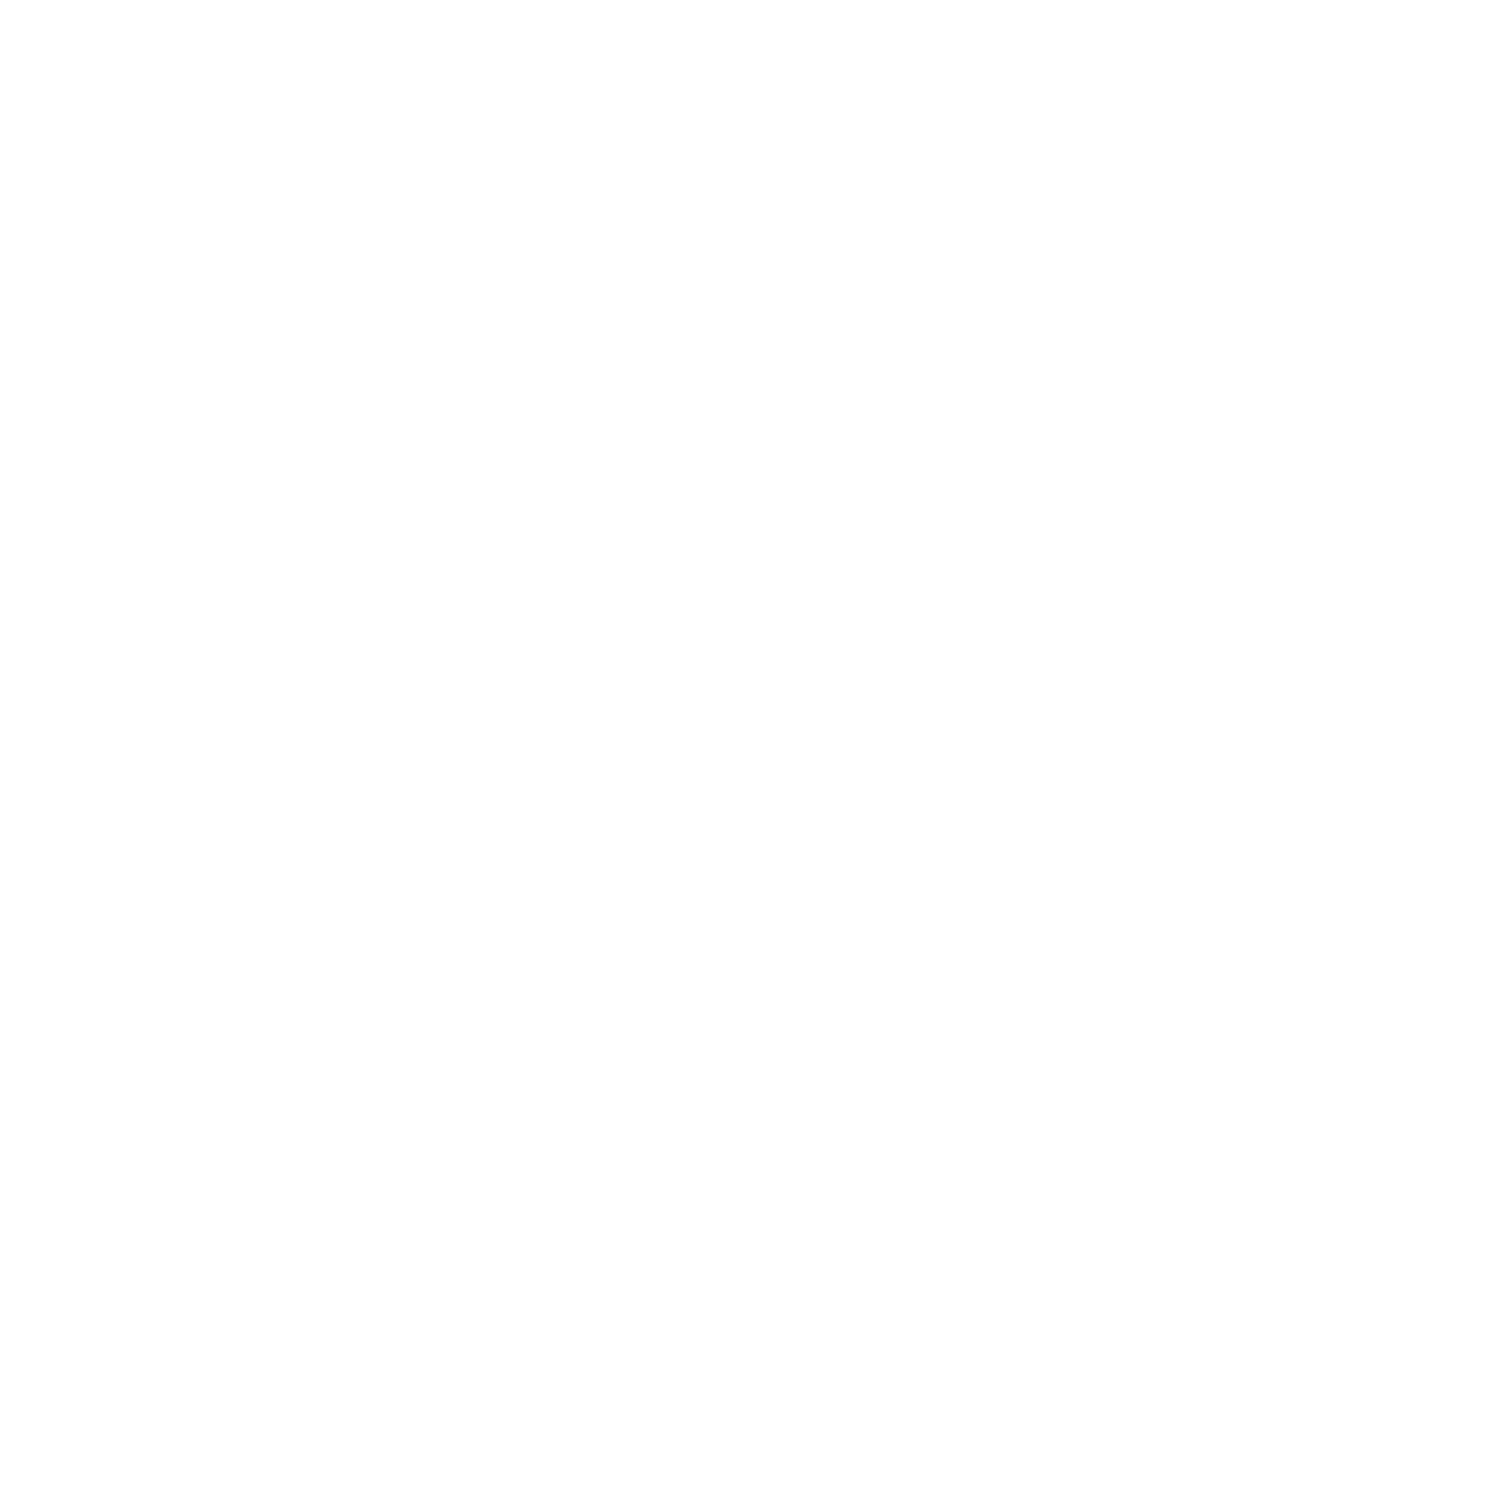 Global helper service